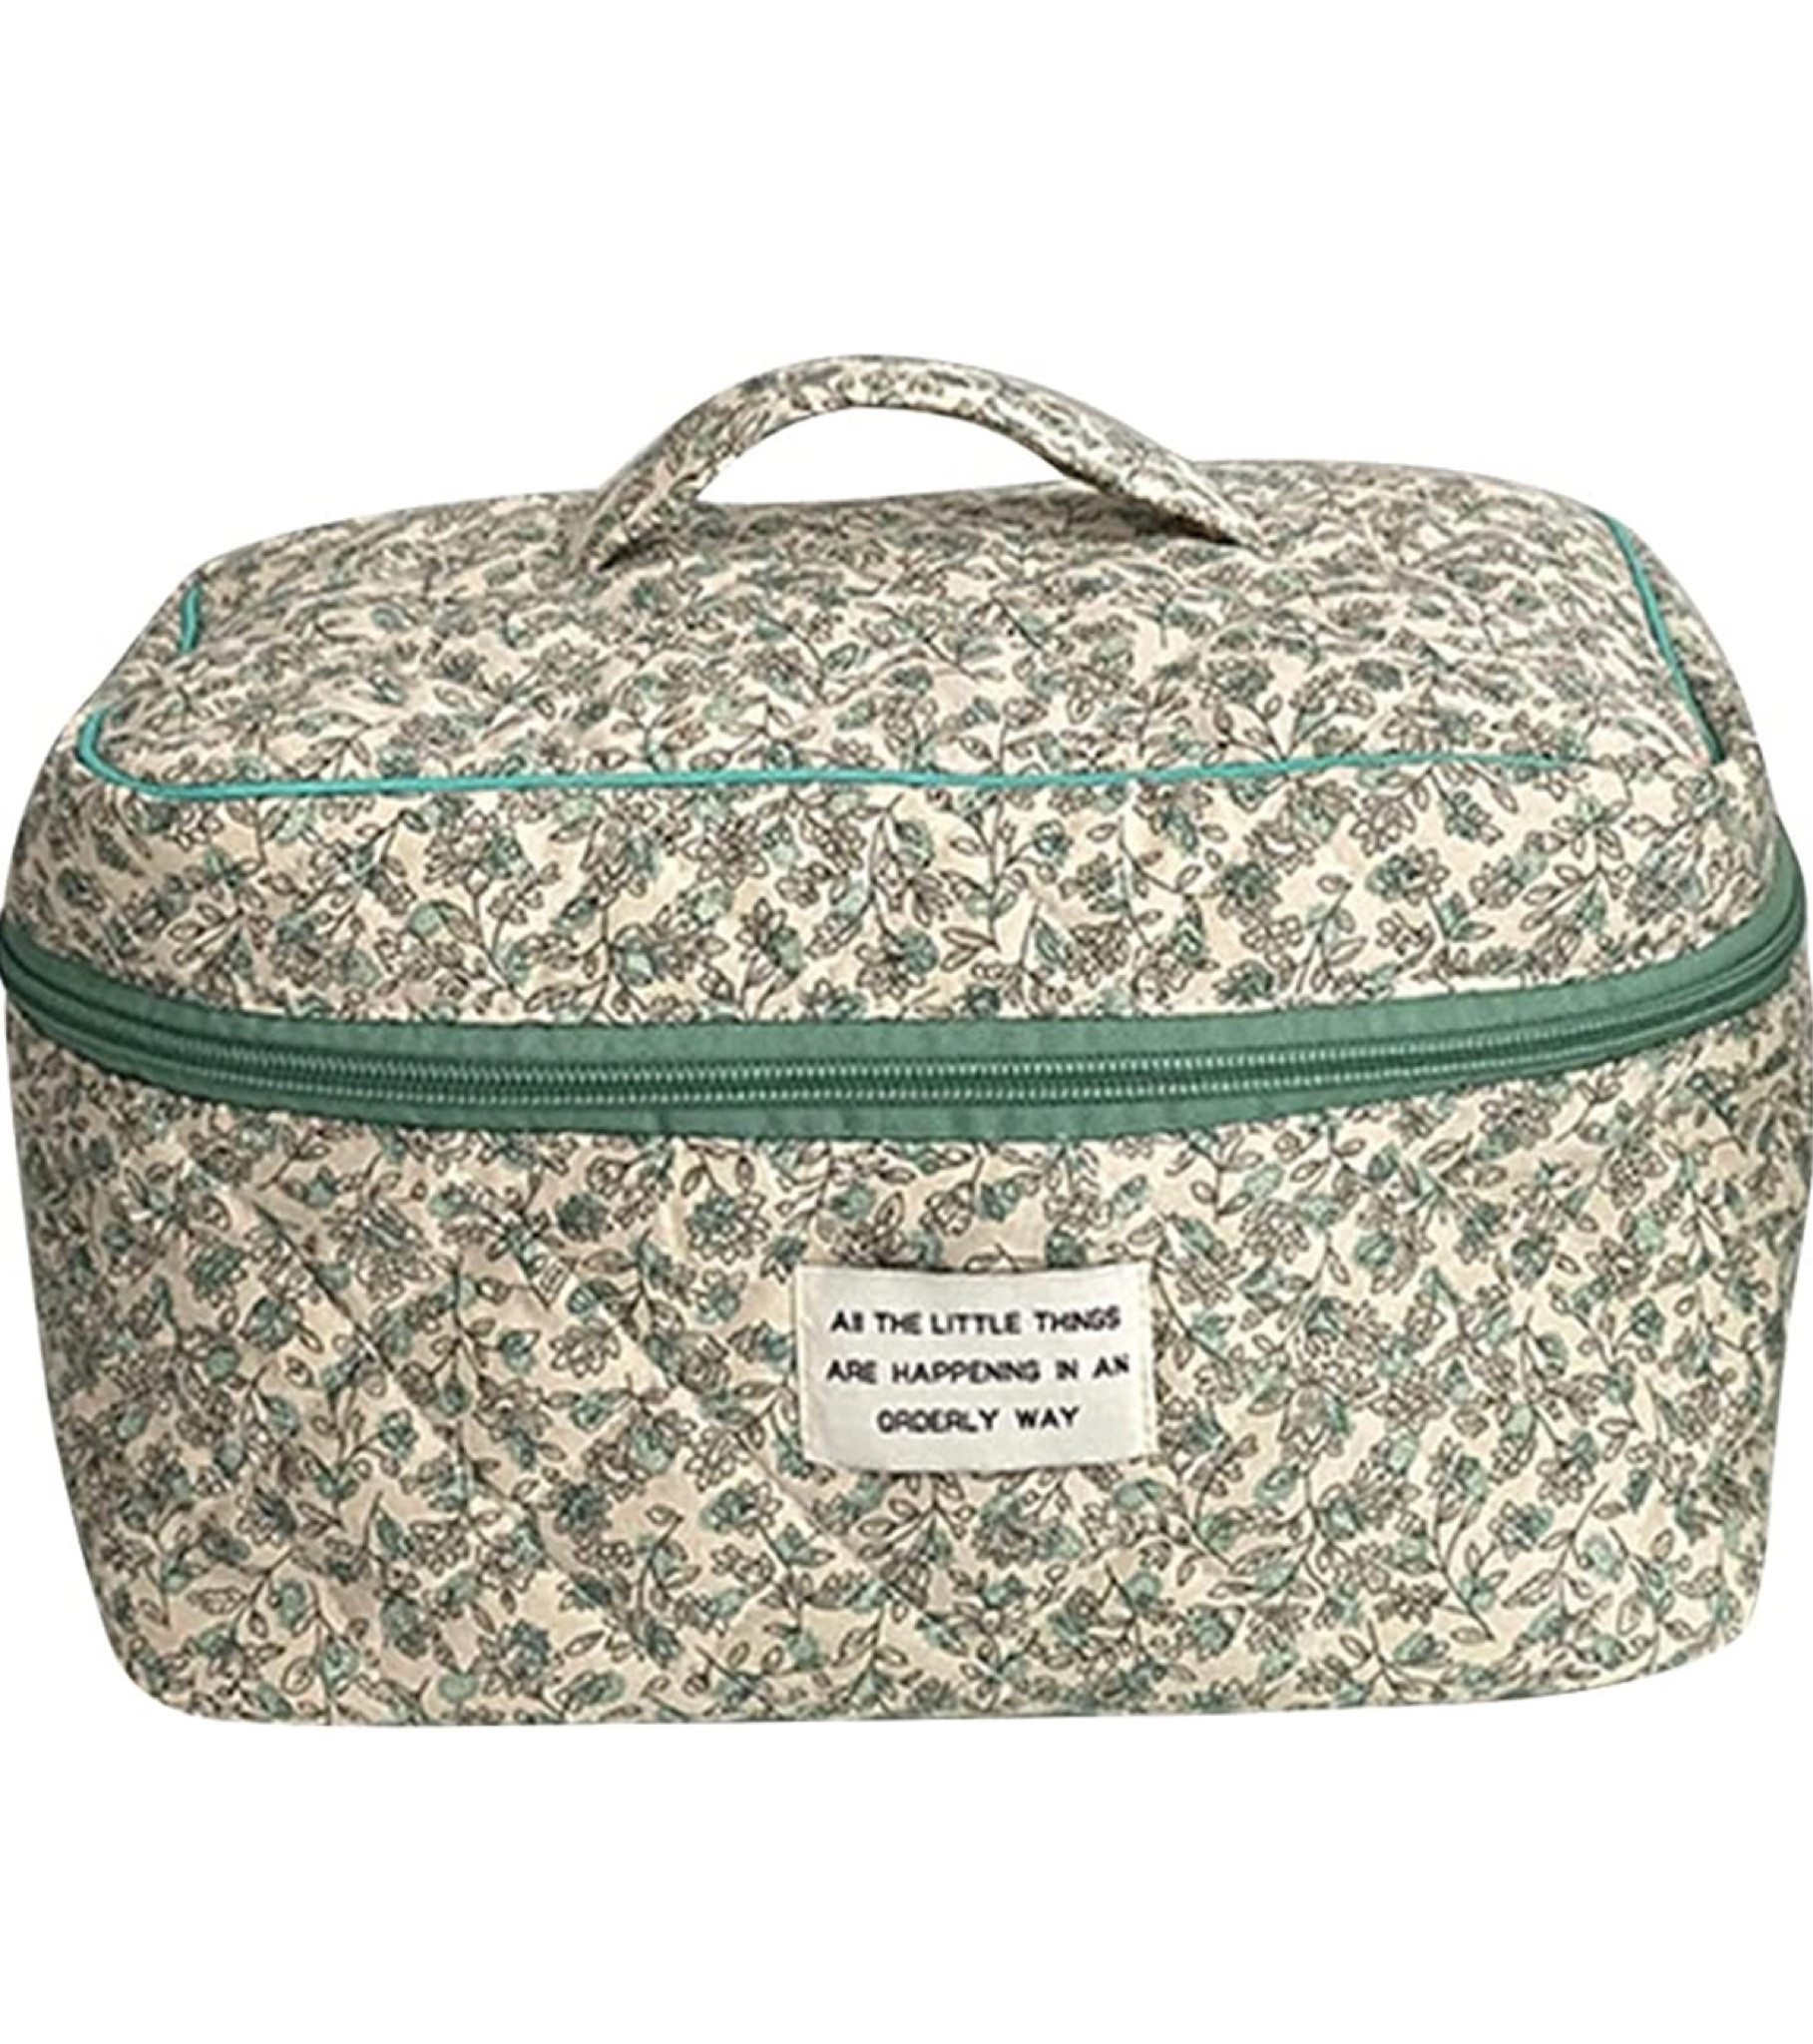  Juoxeepy Cotton Makeup Bag Large Travel Cosmetic Bag